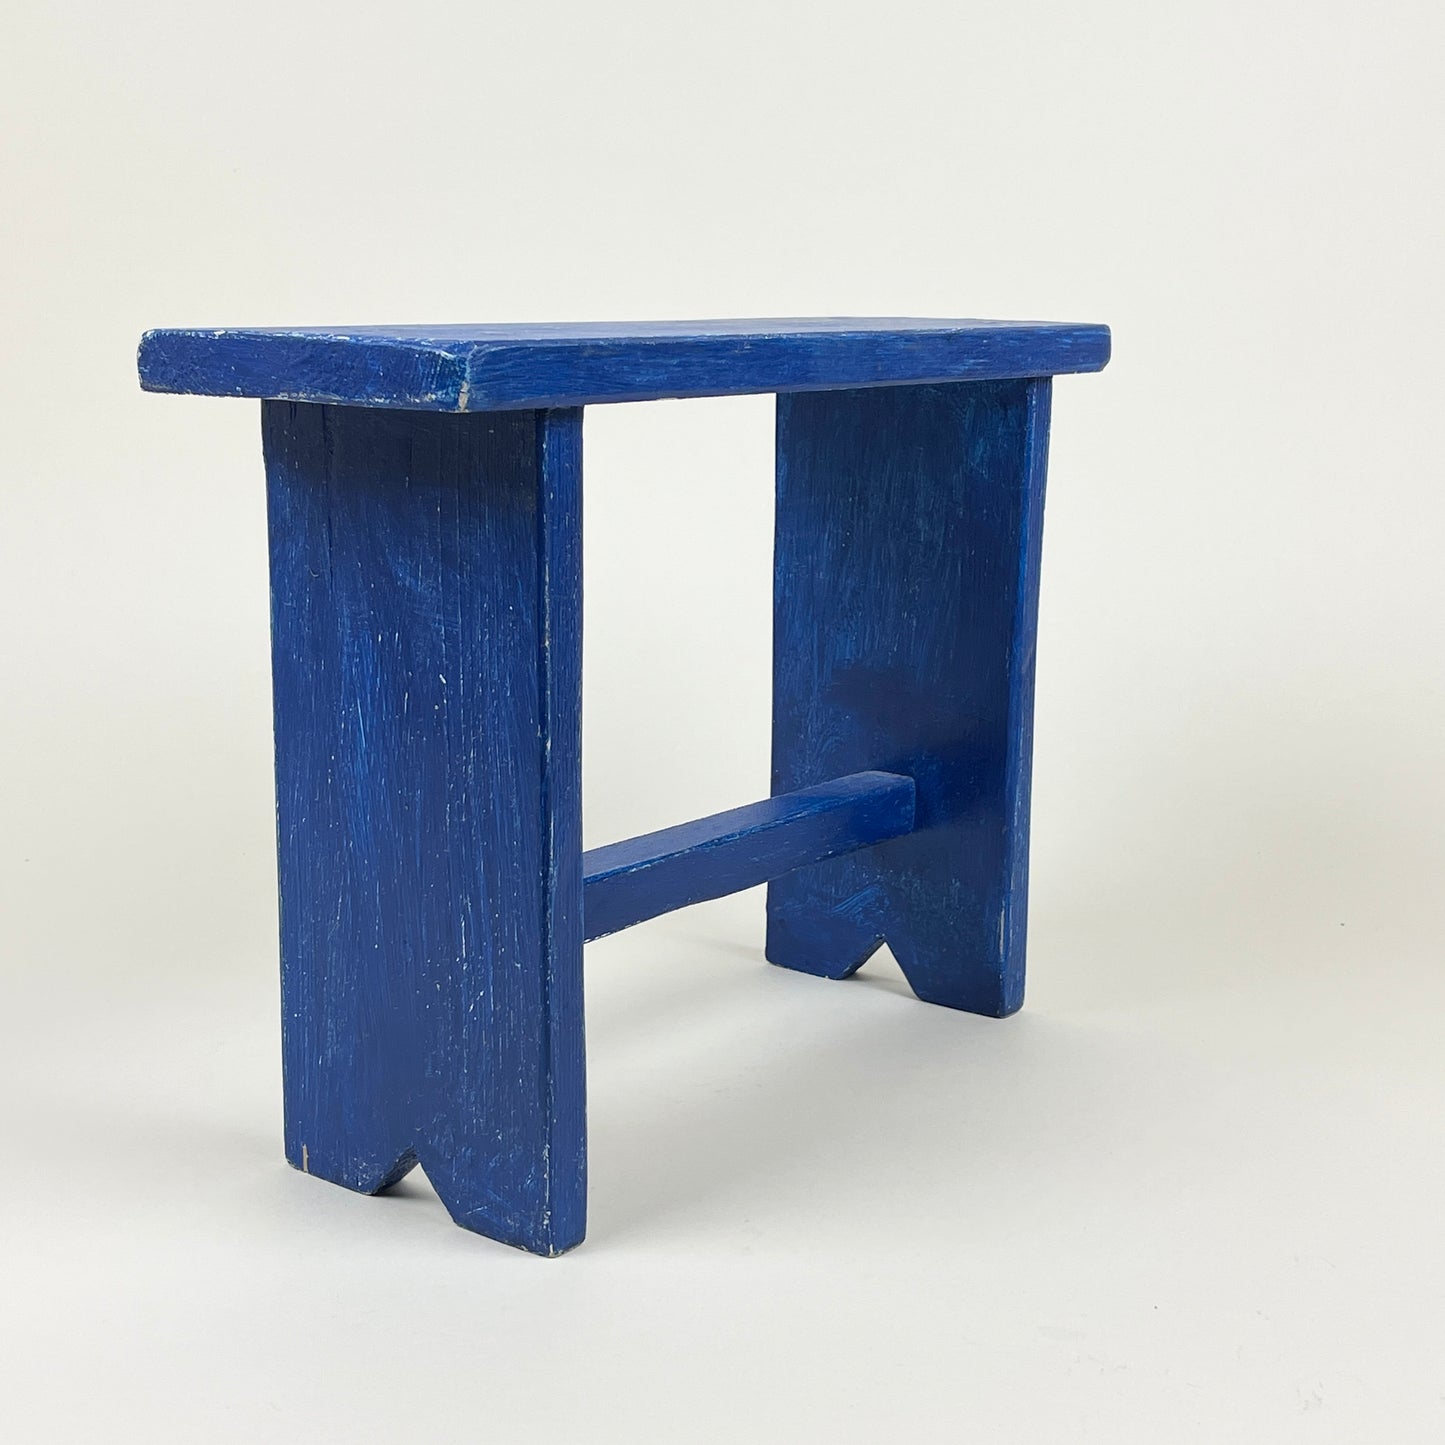 Small blue stool